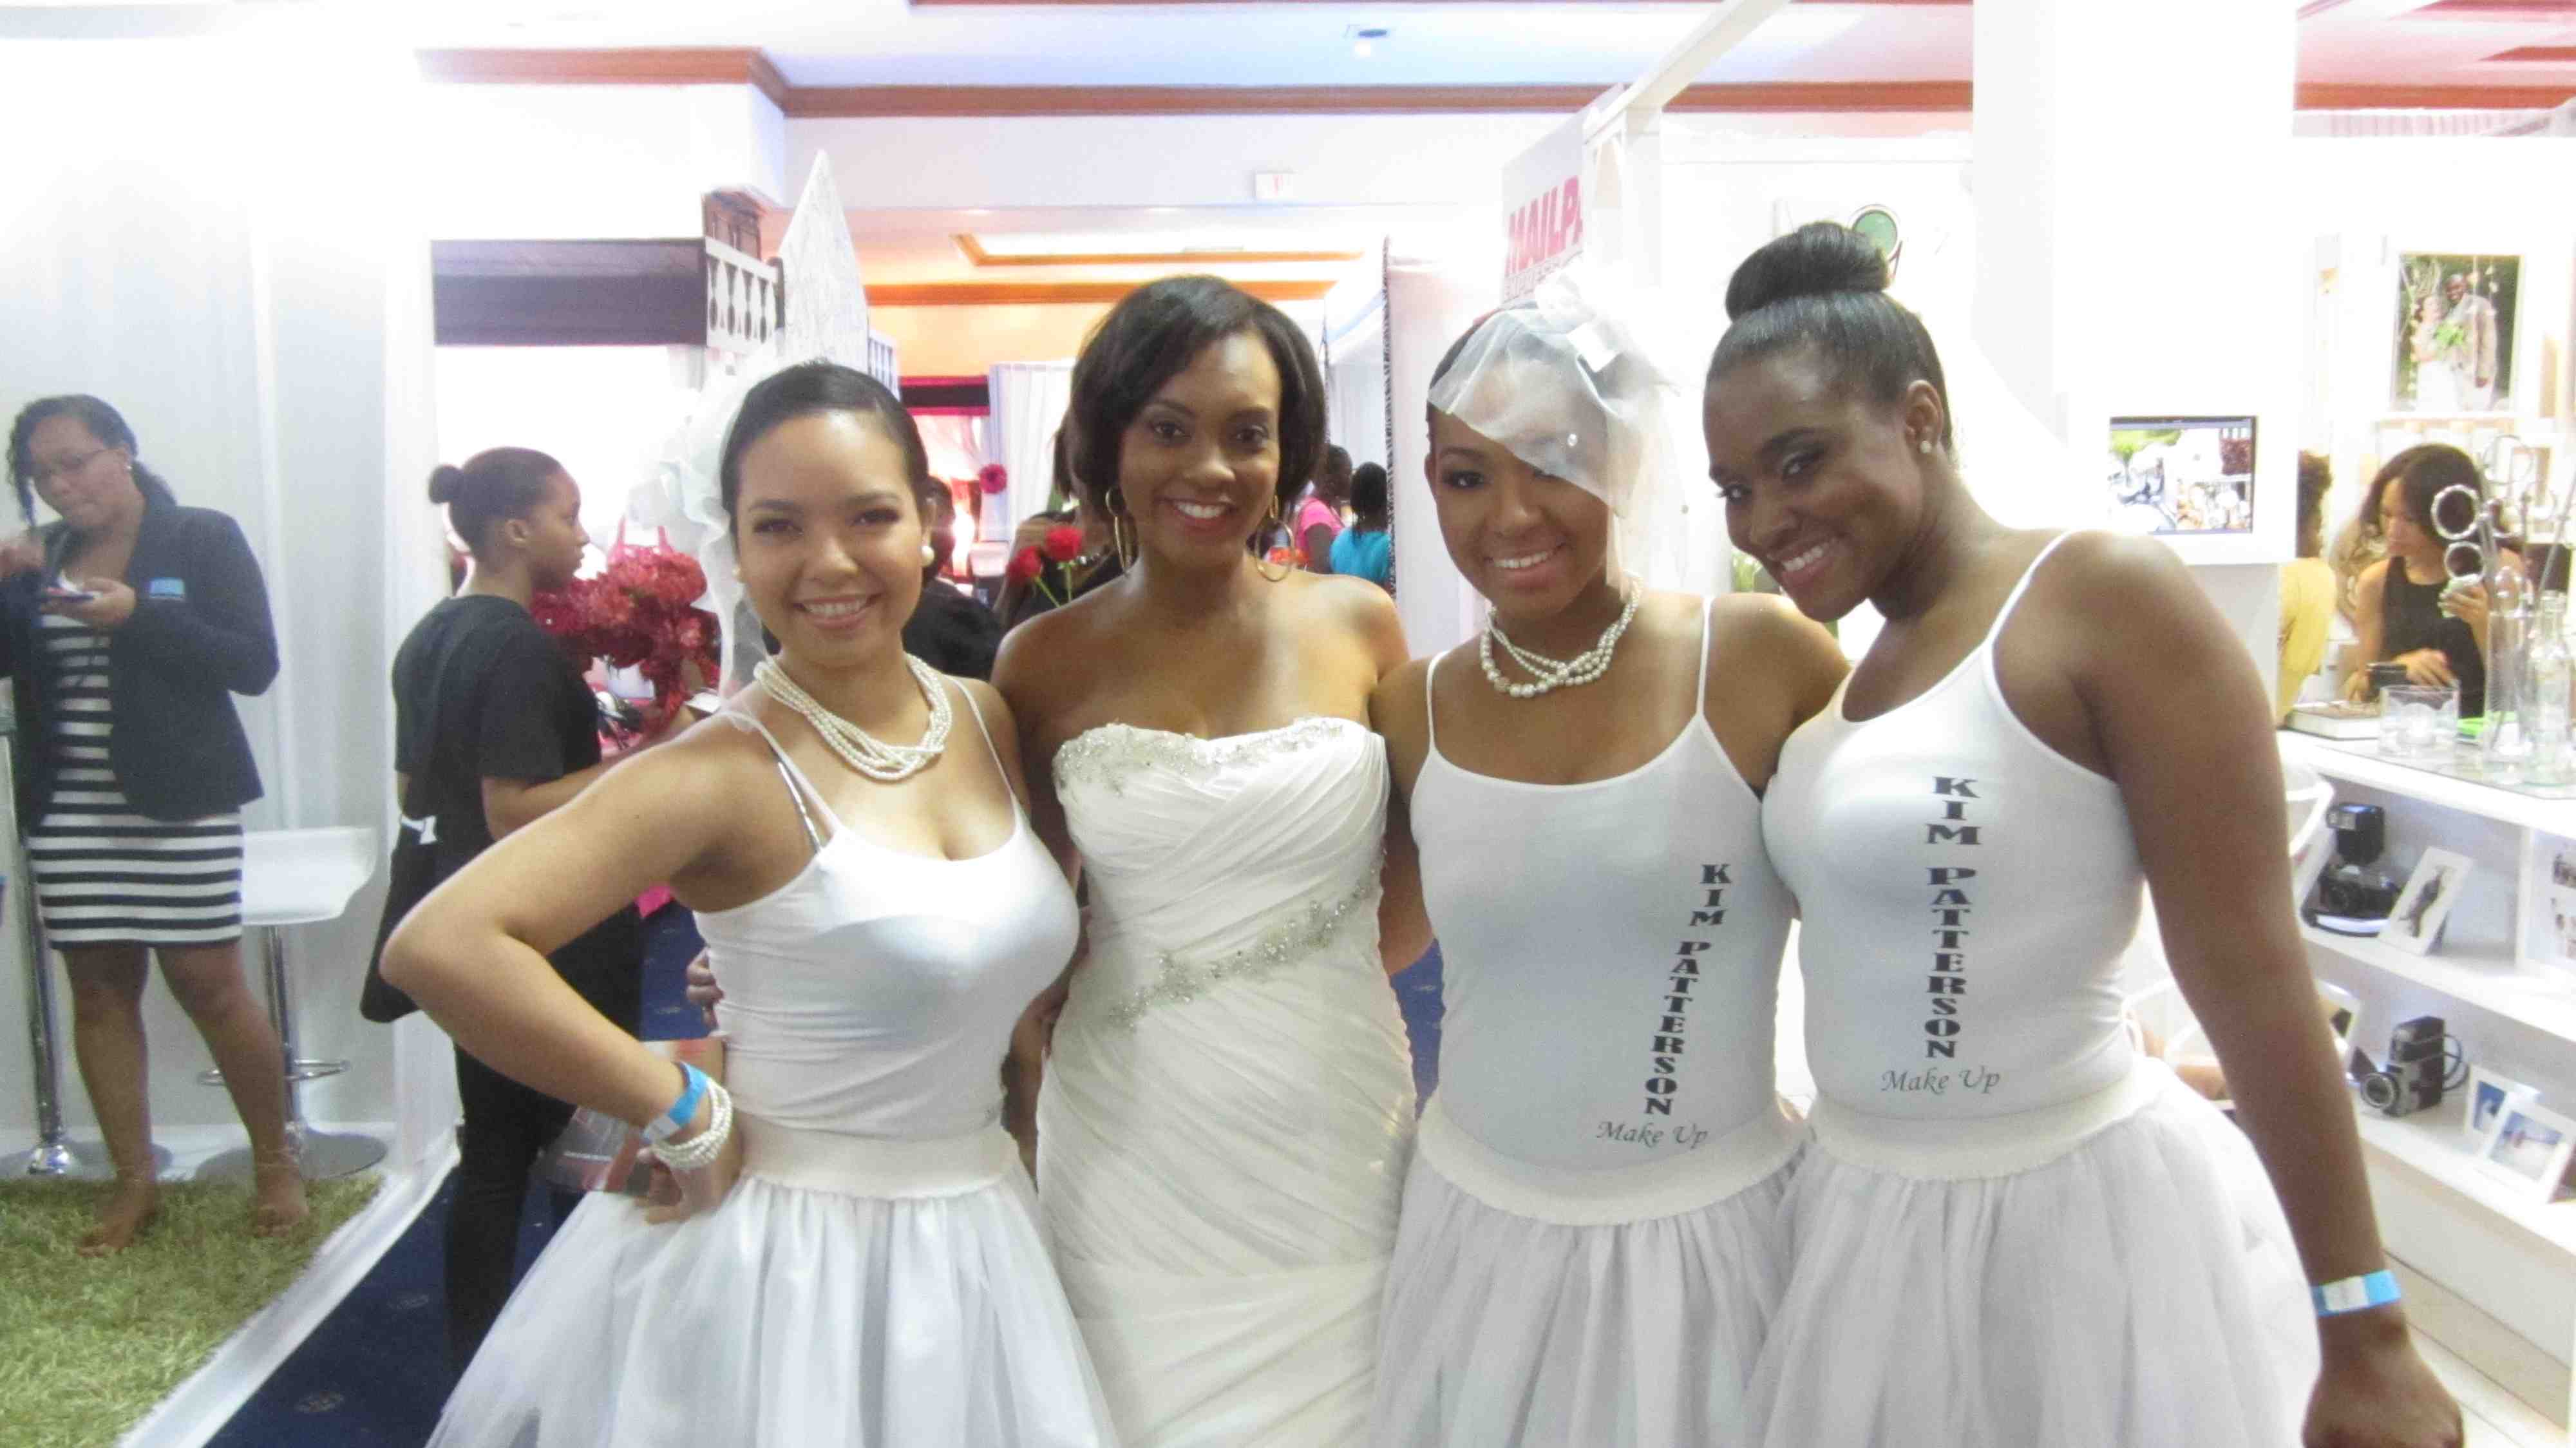 jamaica kingston weddings destination bridal honeymoon bachelorette impromptu vendors photoshoots galore elaborate trash huffingtonpost